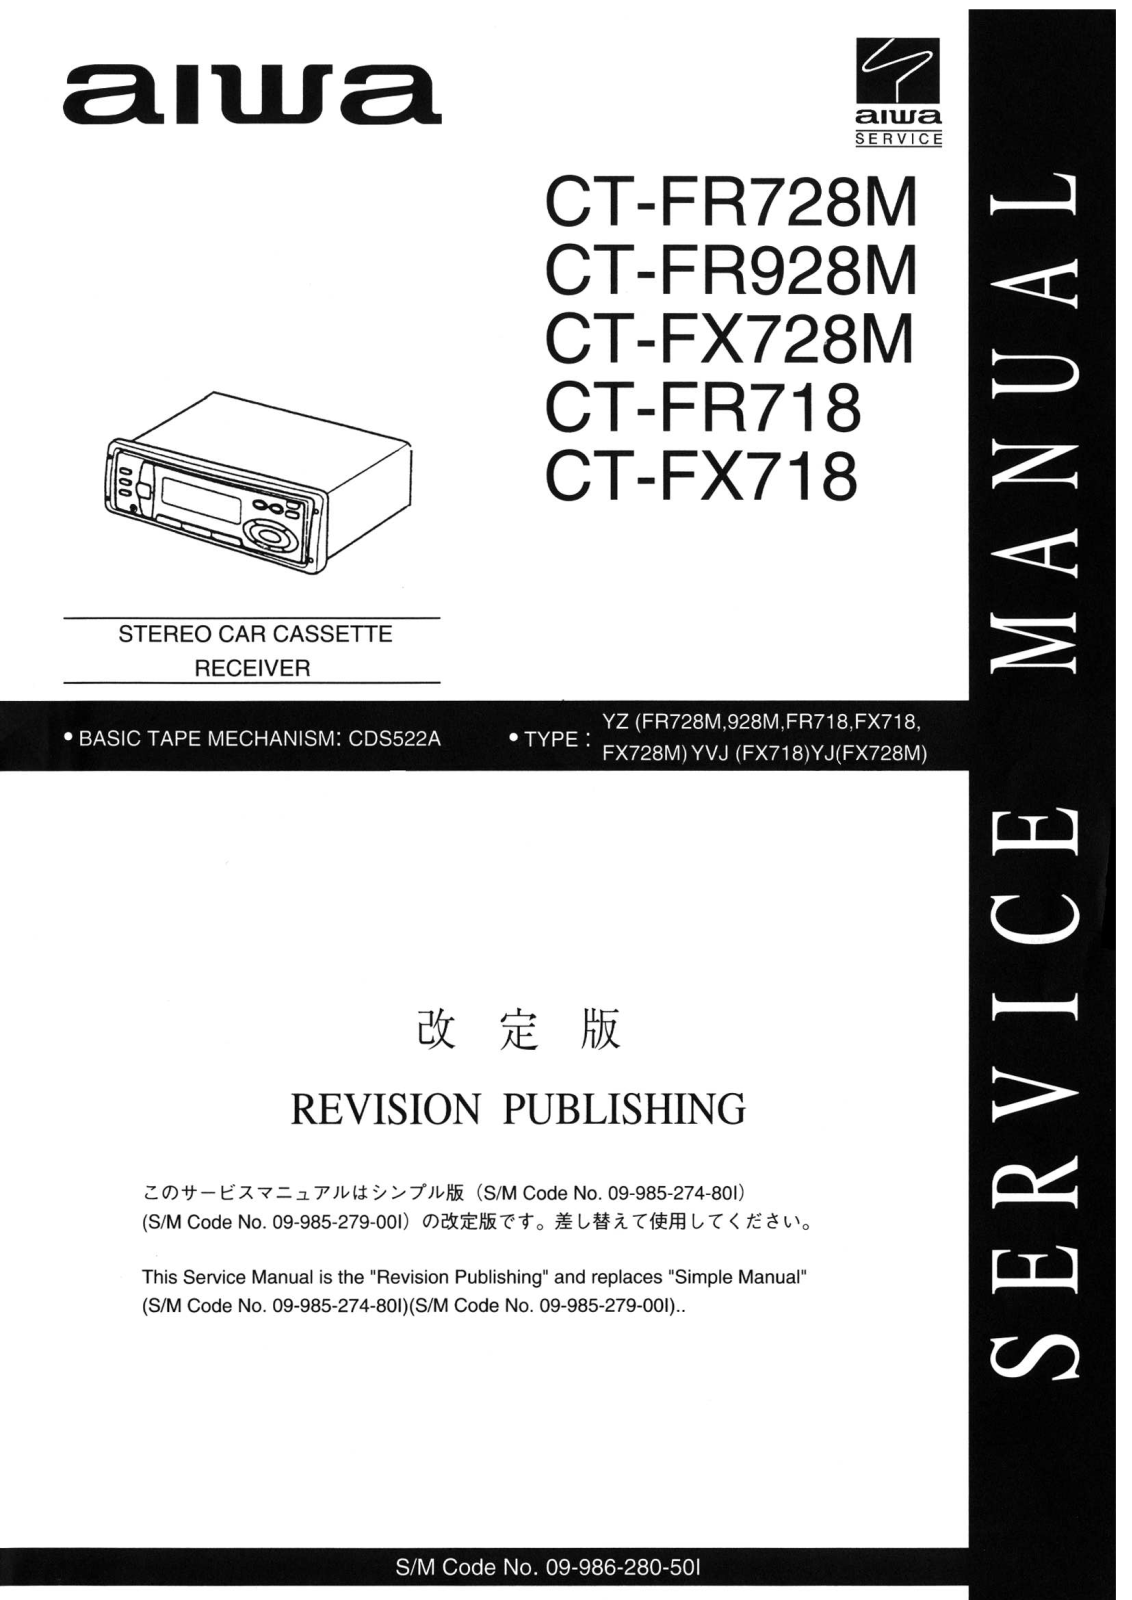 Aiwa CT-FX718, CT-FR718, CT-FX728M, CT-FR928M, CT-FR728M Service Manual